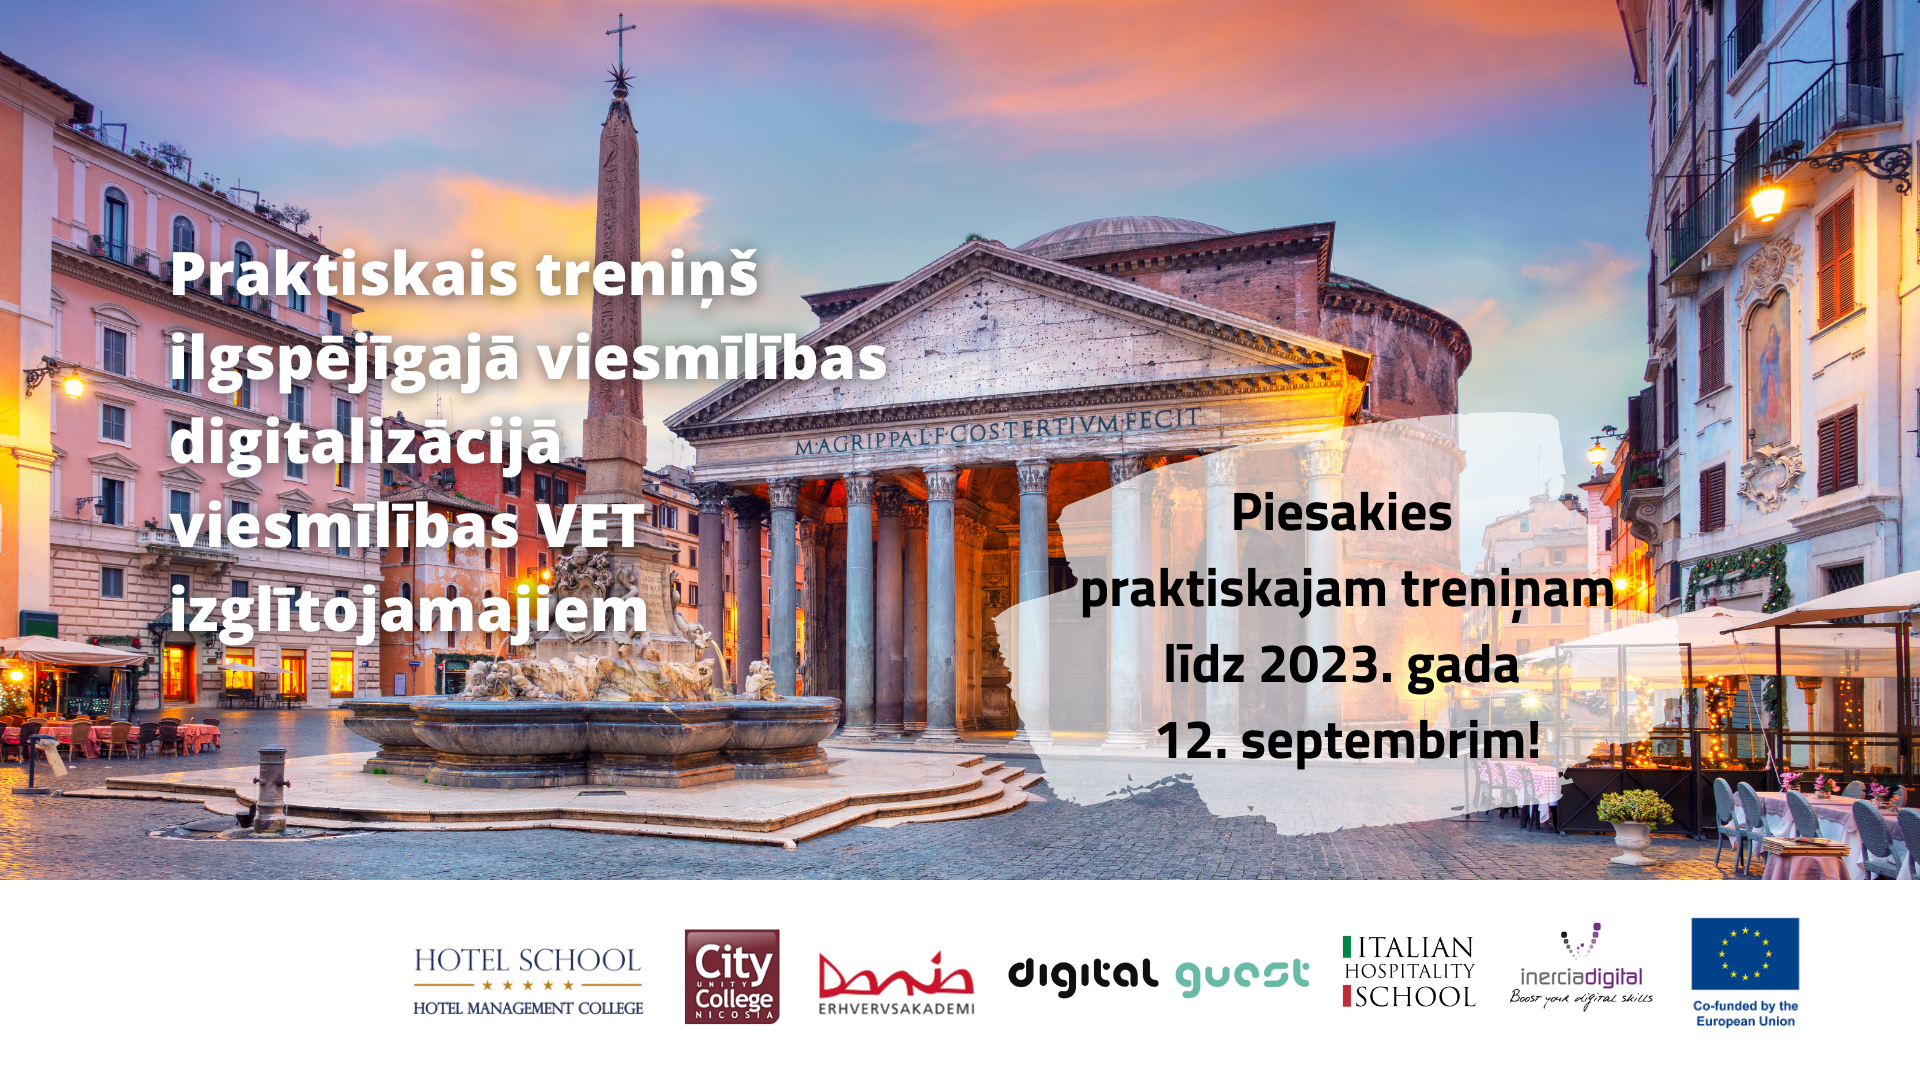 Erasmus VET Learner Mobility Call 1 “Workshop Training in Sustainable Hospitality Digitalisation for Hospitality VET Learners” (No. 2021-1-LV01-KA220-VET-000033140)